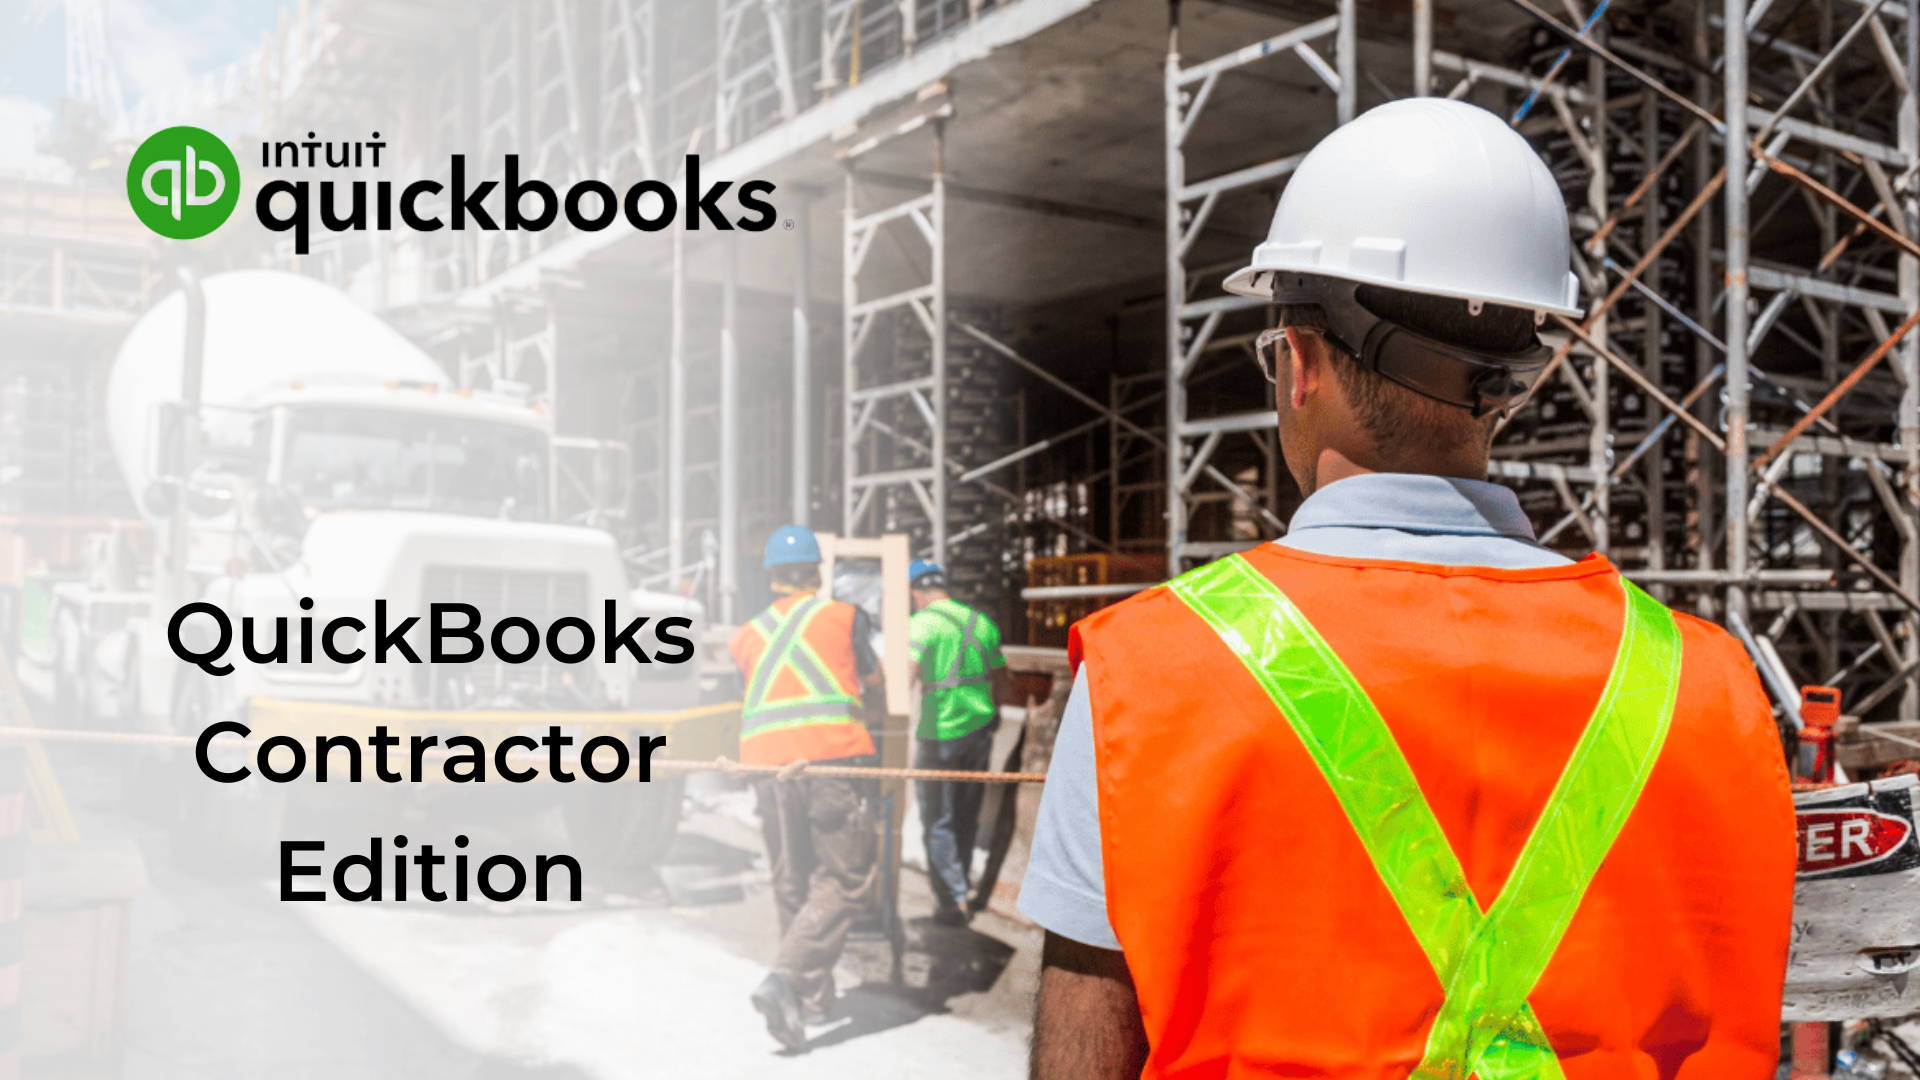 Intuit QuickBooks Contractor edition